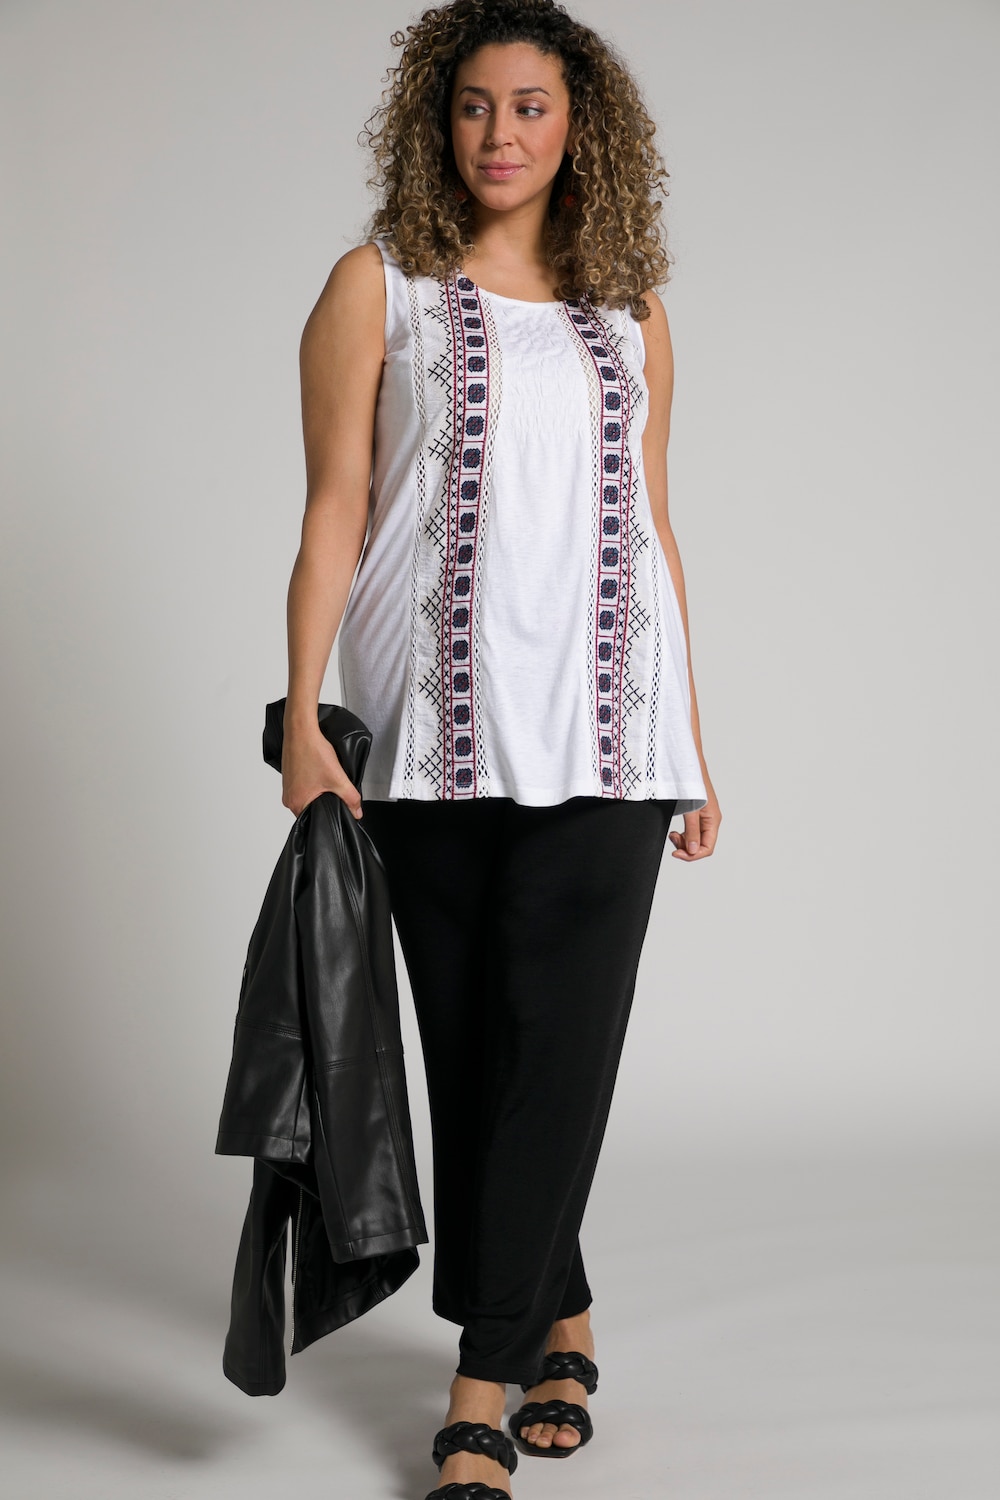 Plus Size Charming Details Embroidery Cotton Knit Tank, Woman, white, size: 16/18, cotton, Ulla Popken